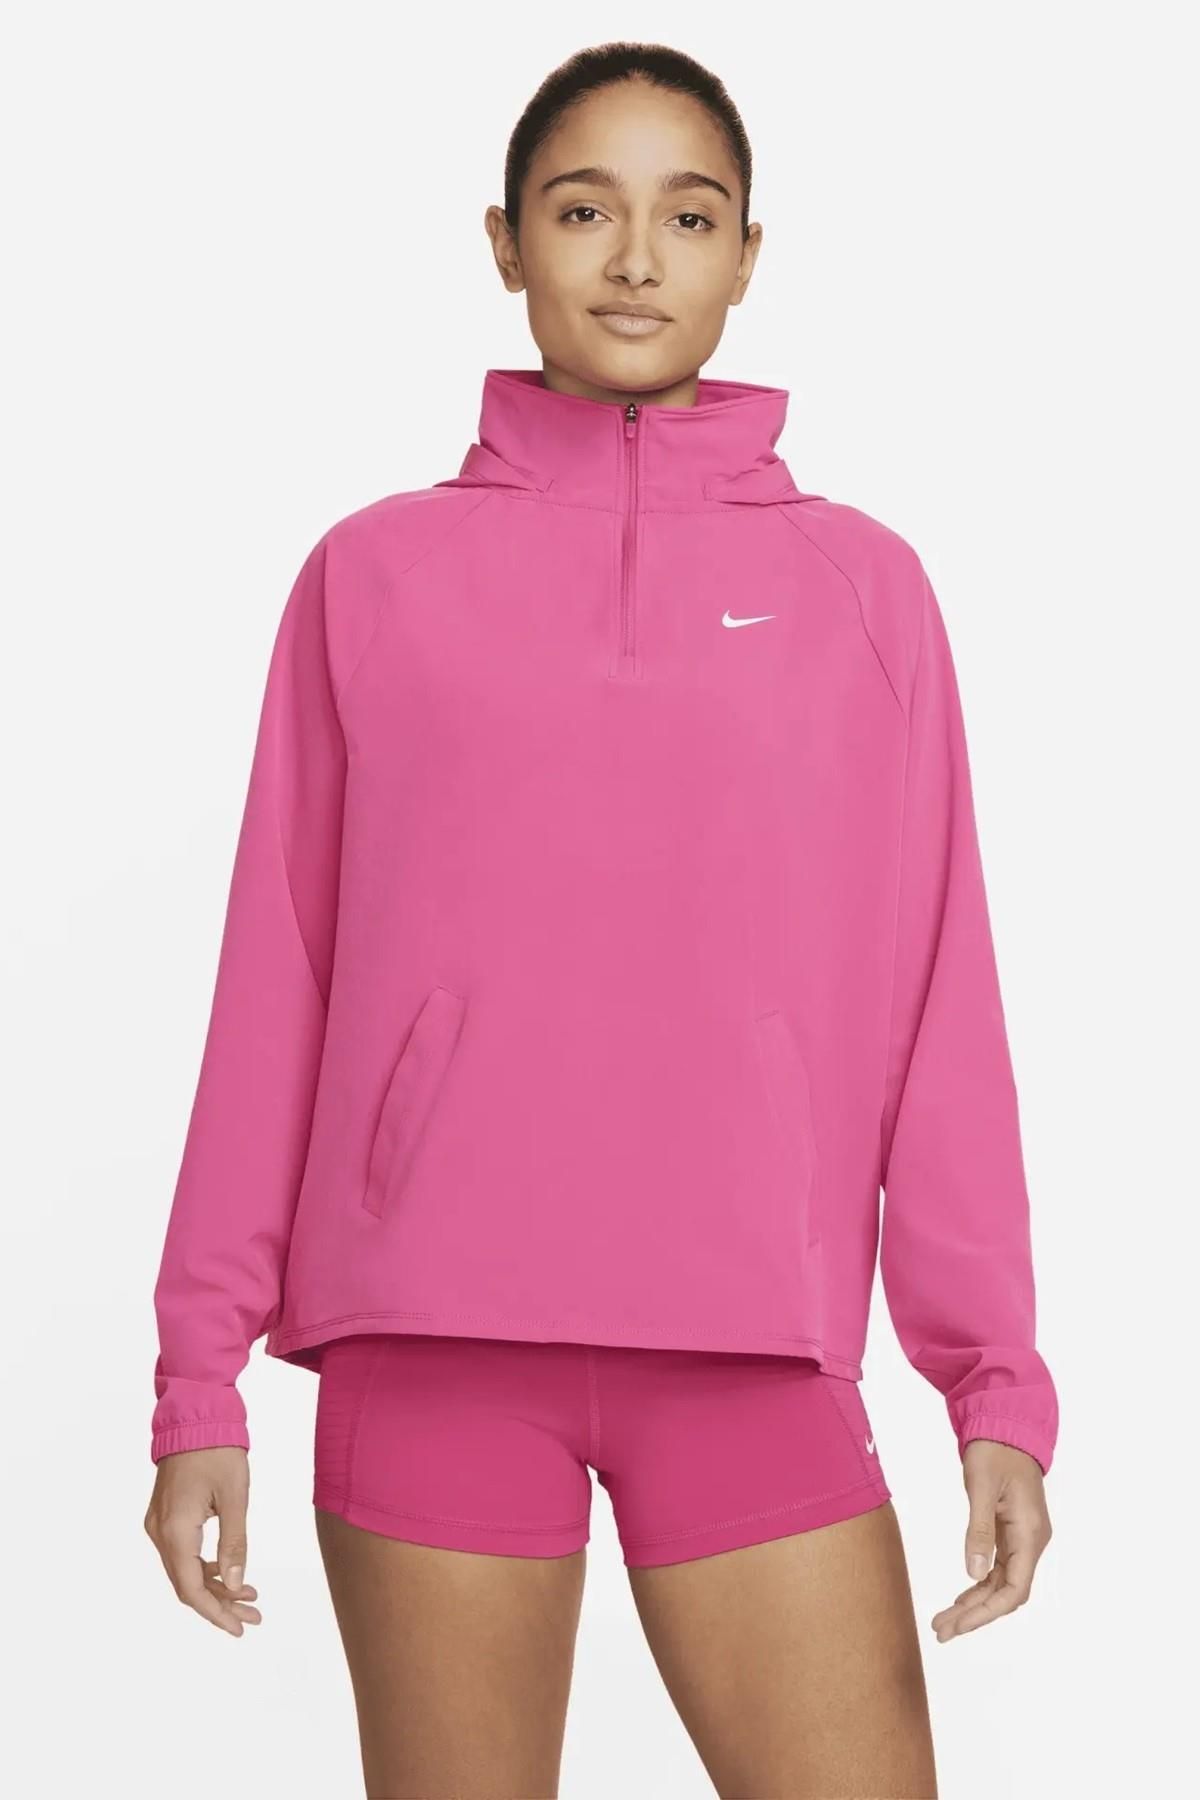 Nike Pro Training Packable 1/4 Zip Pink Jacket Çantaya Dönüşebilen Fermuarlı Ceket Pembe